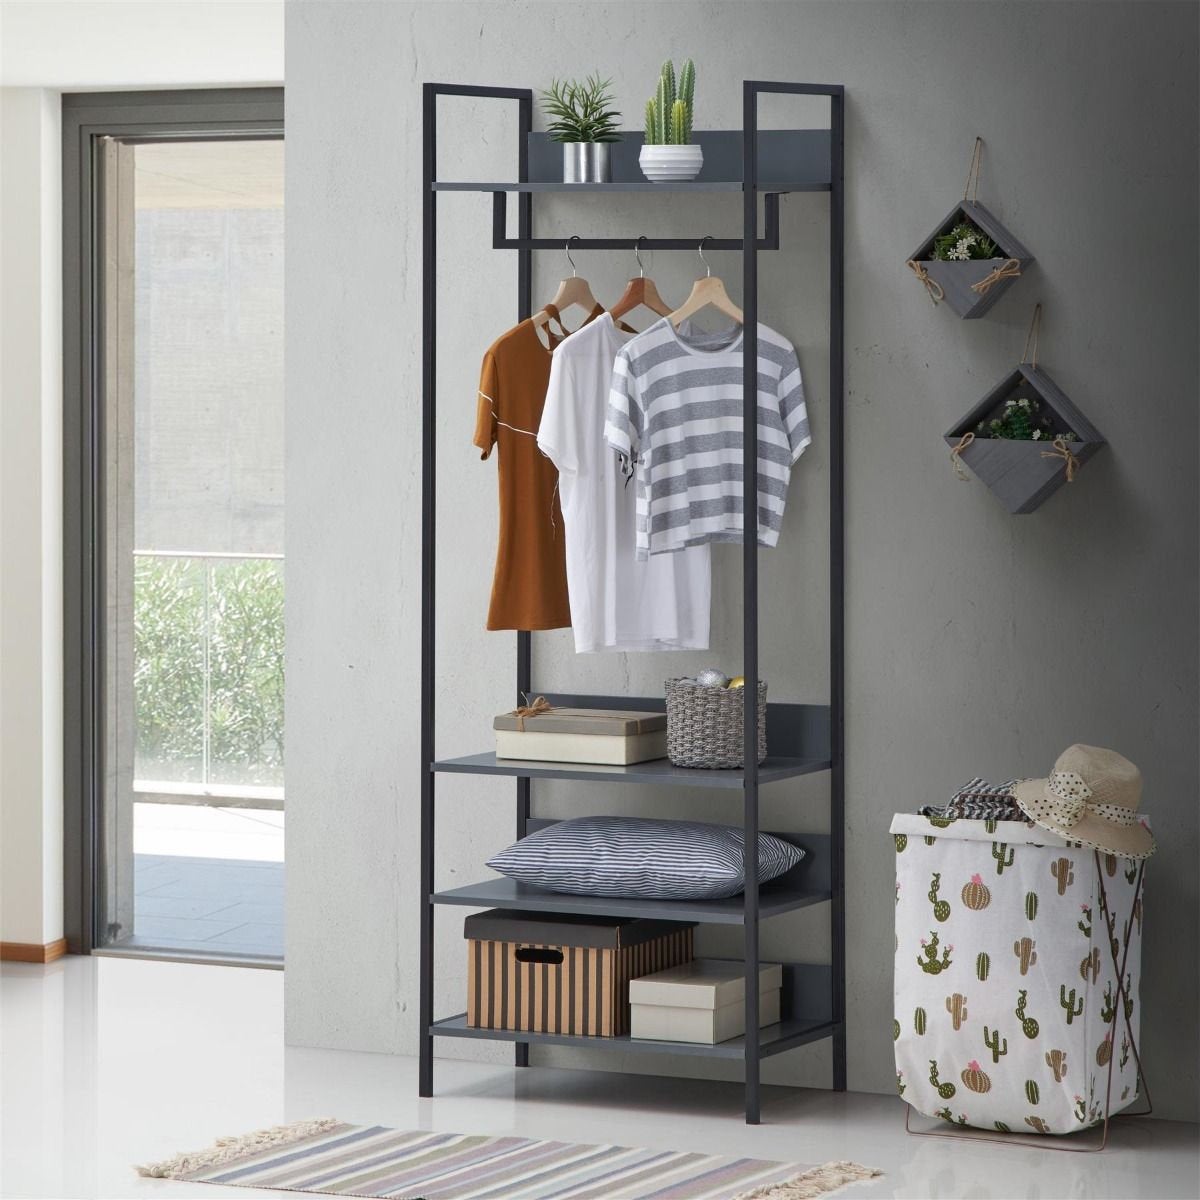 Seville Clothing Rack With Shelf Open Wardrobe Unit Industrial Design